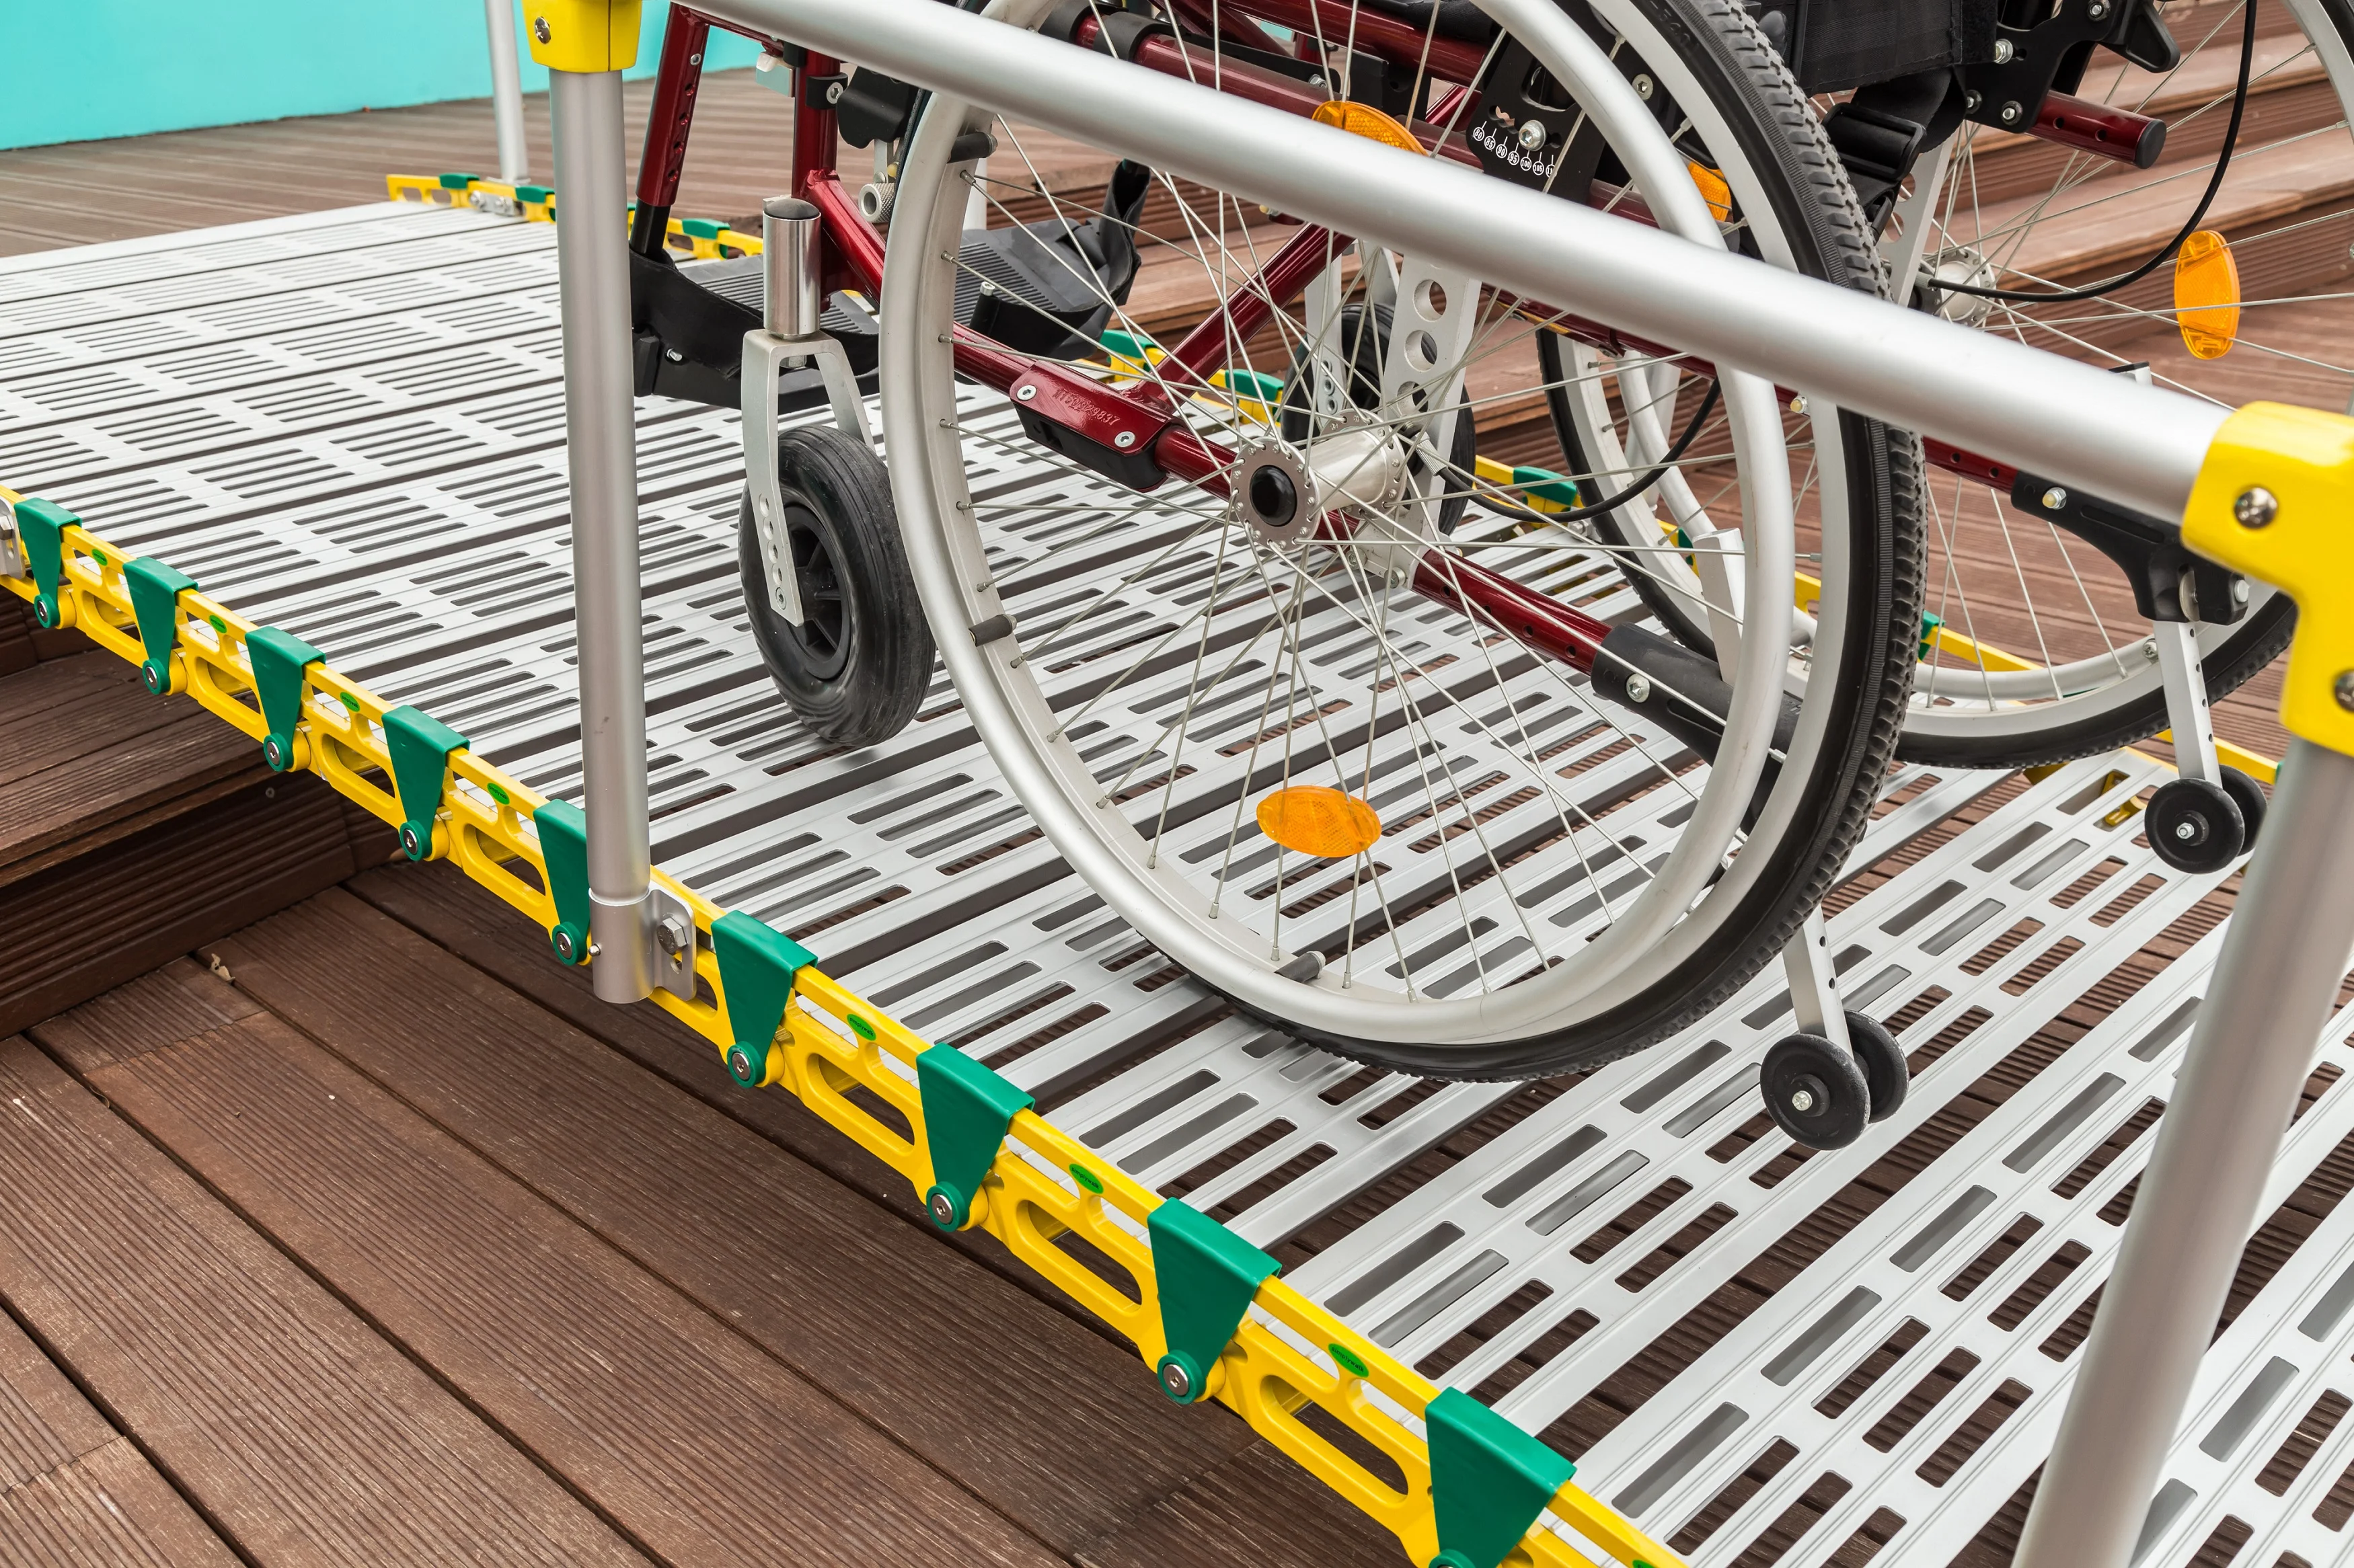 Aluminum handicap buy wheelchair ramp with handrails